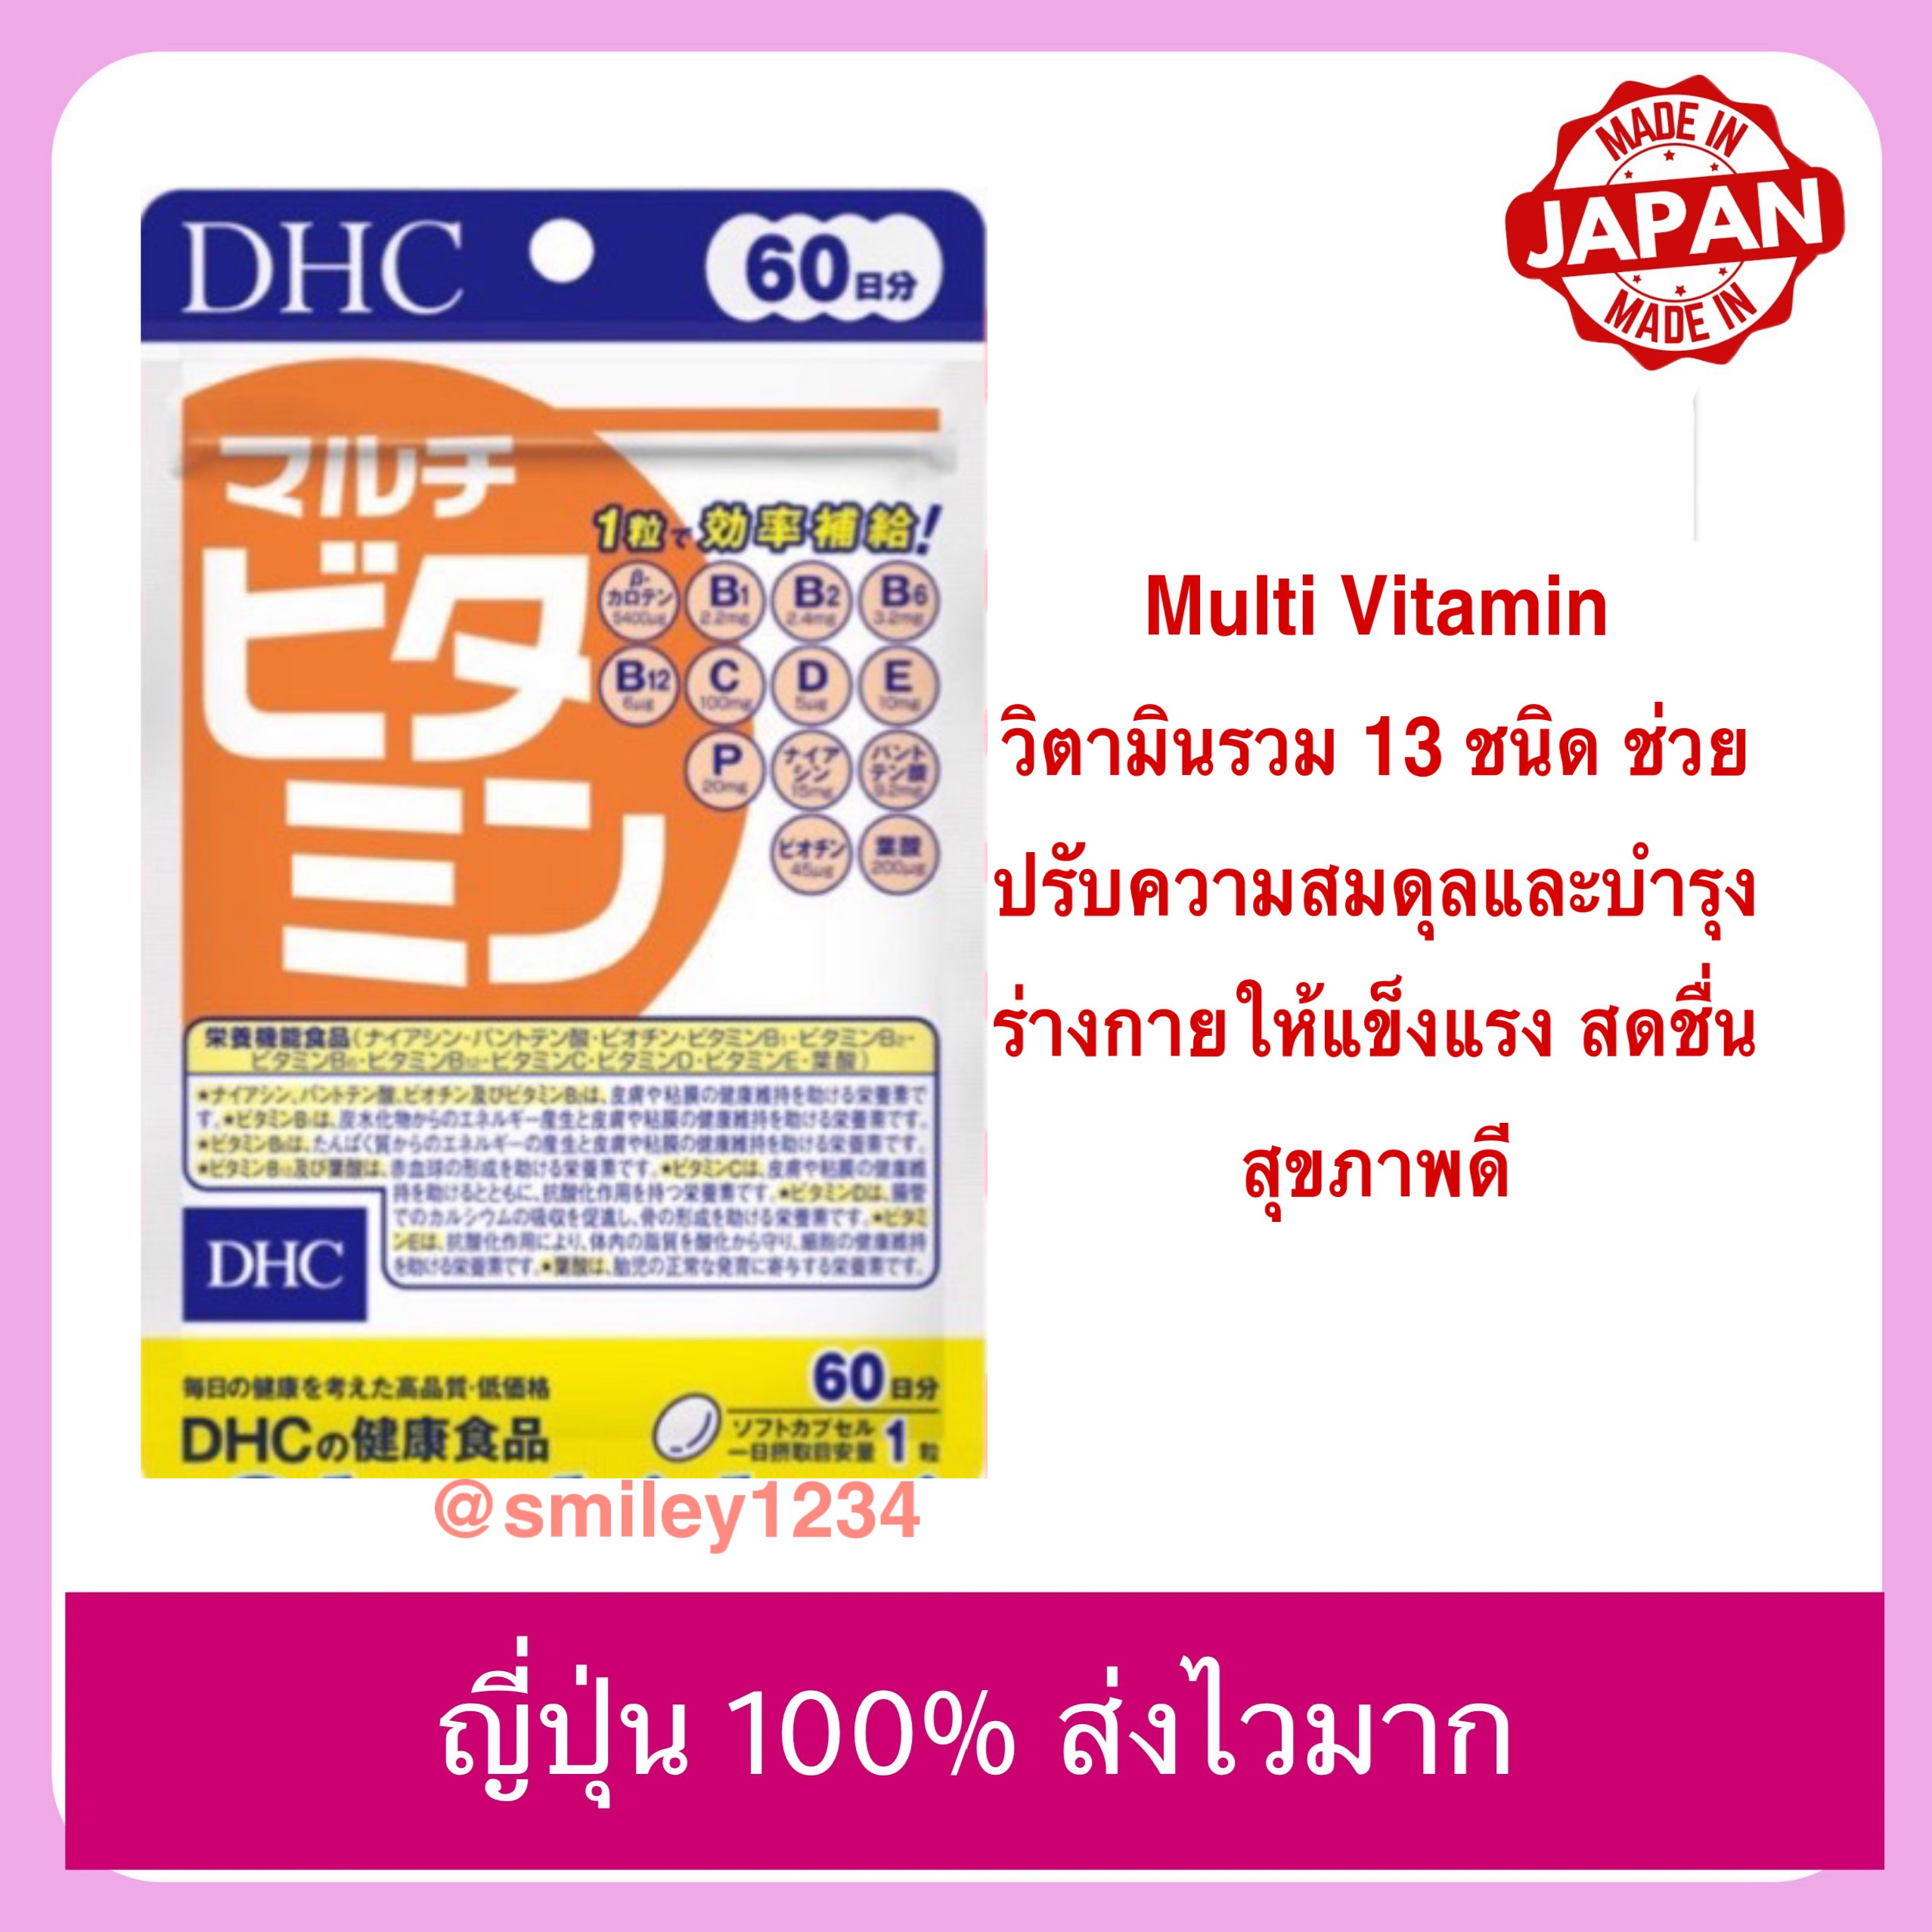 DHC Multi Vitamin วิตามินรวม 60 วัน หมดอายุ 2022-2023 ของญี่ปุ่นแท้ 100%